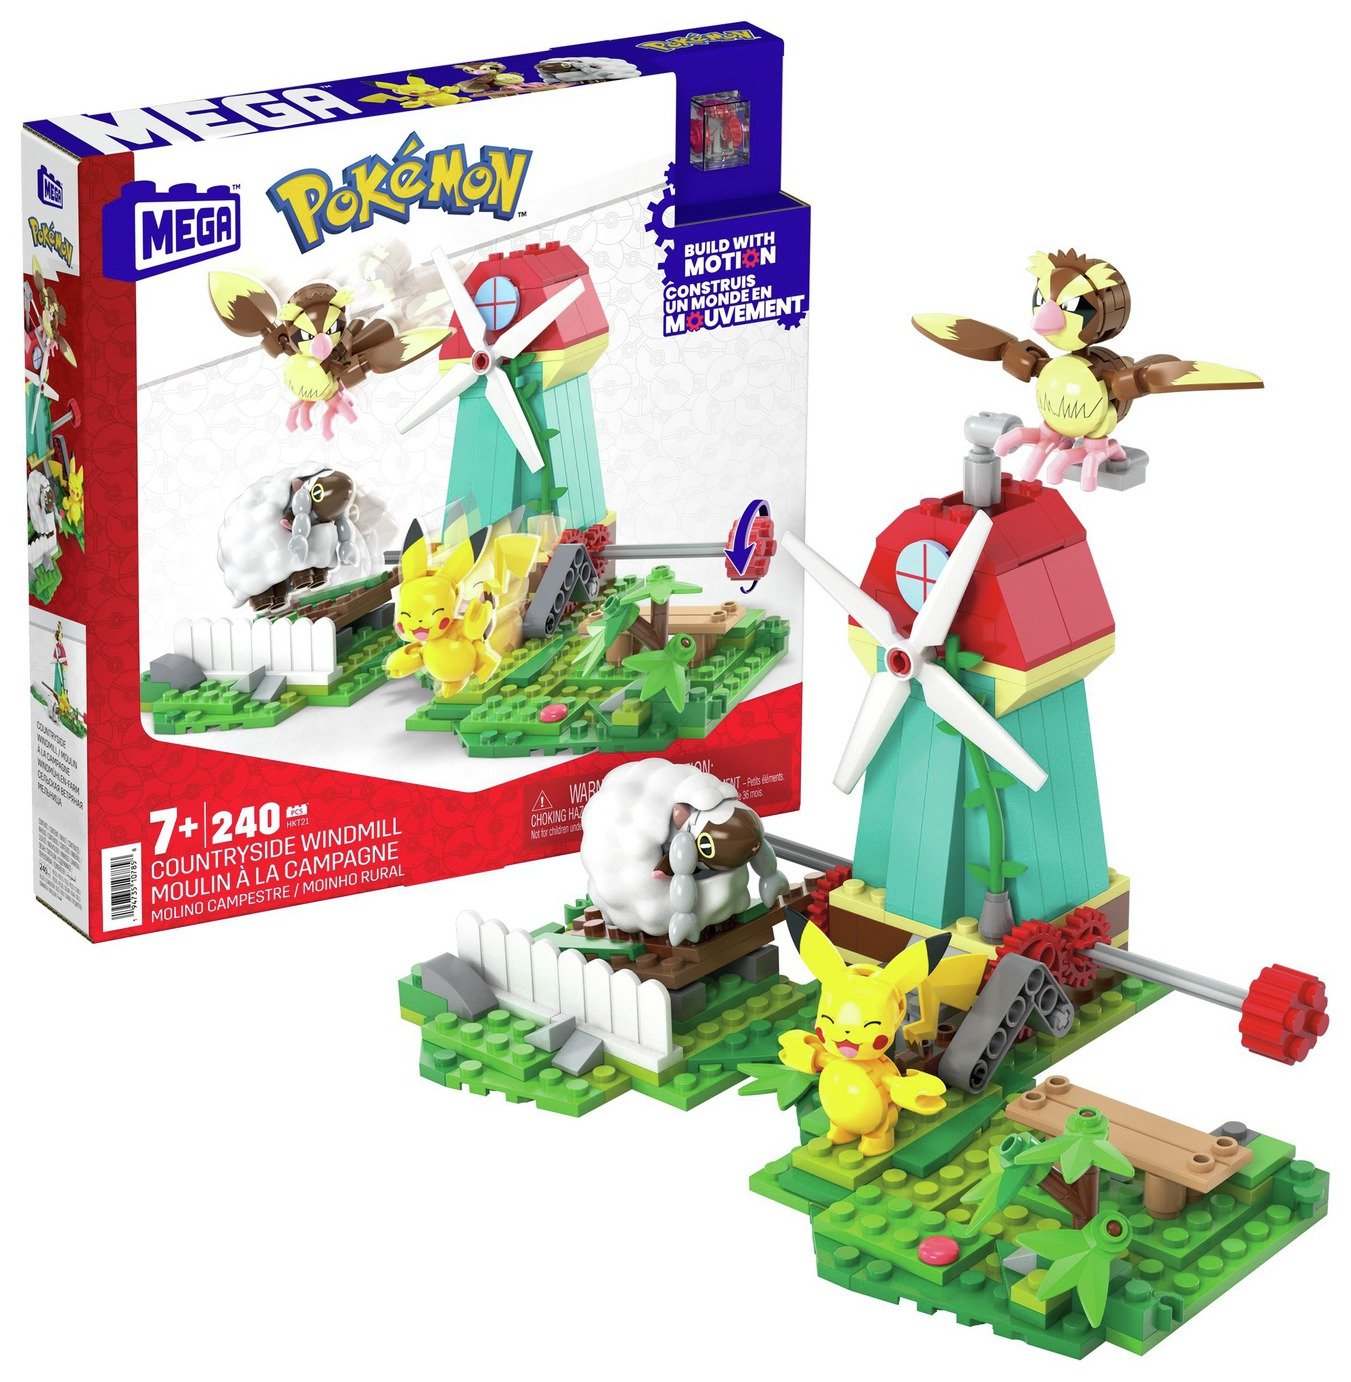 Mega Pokémon Countryside Windmill Building Set